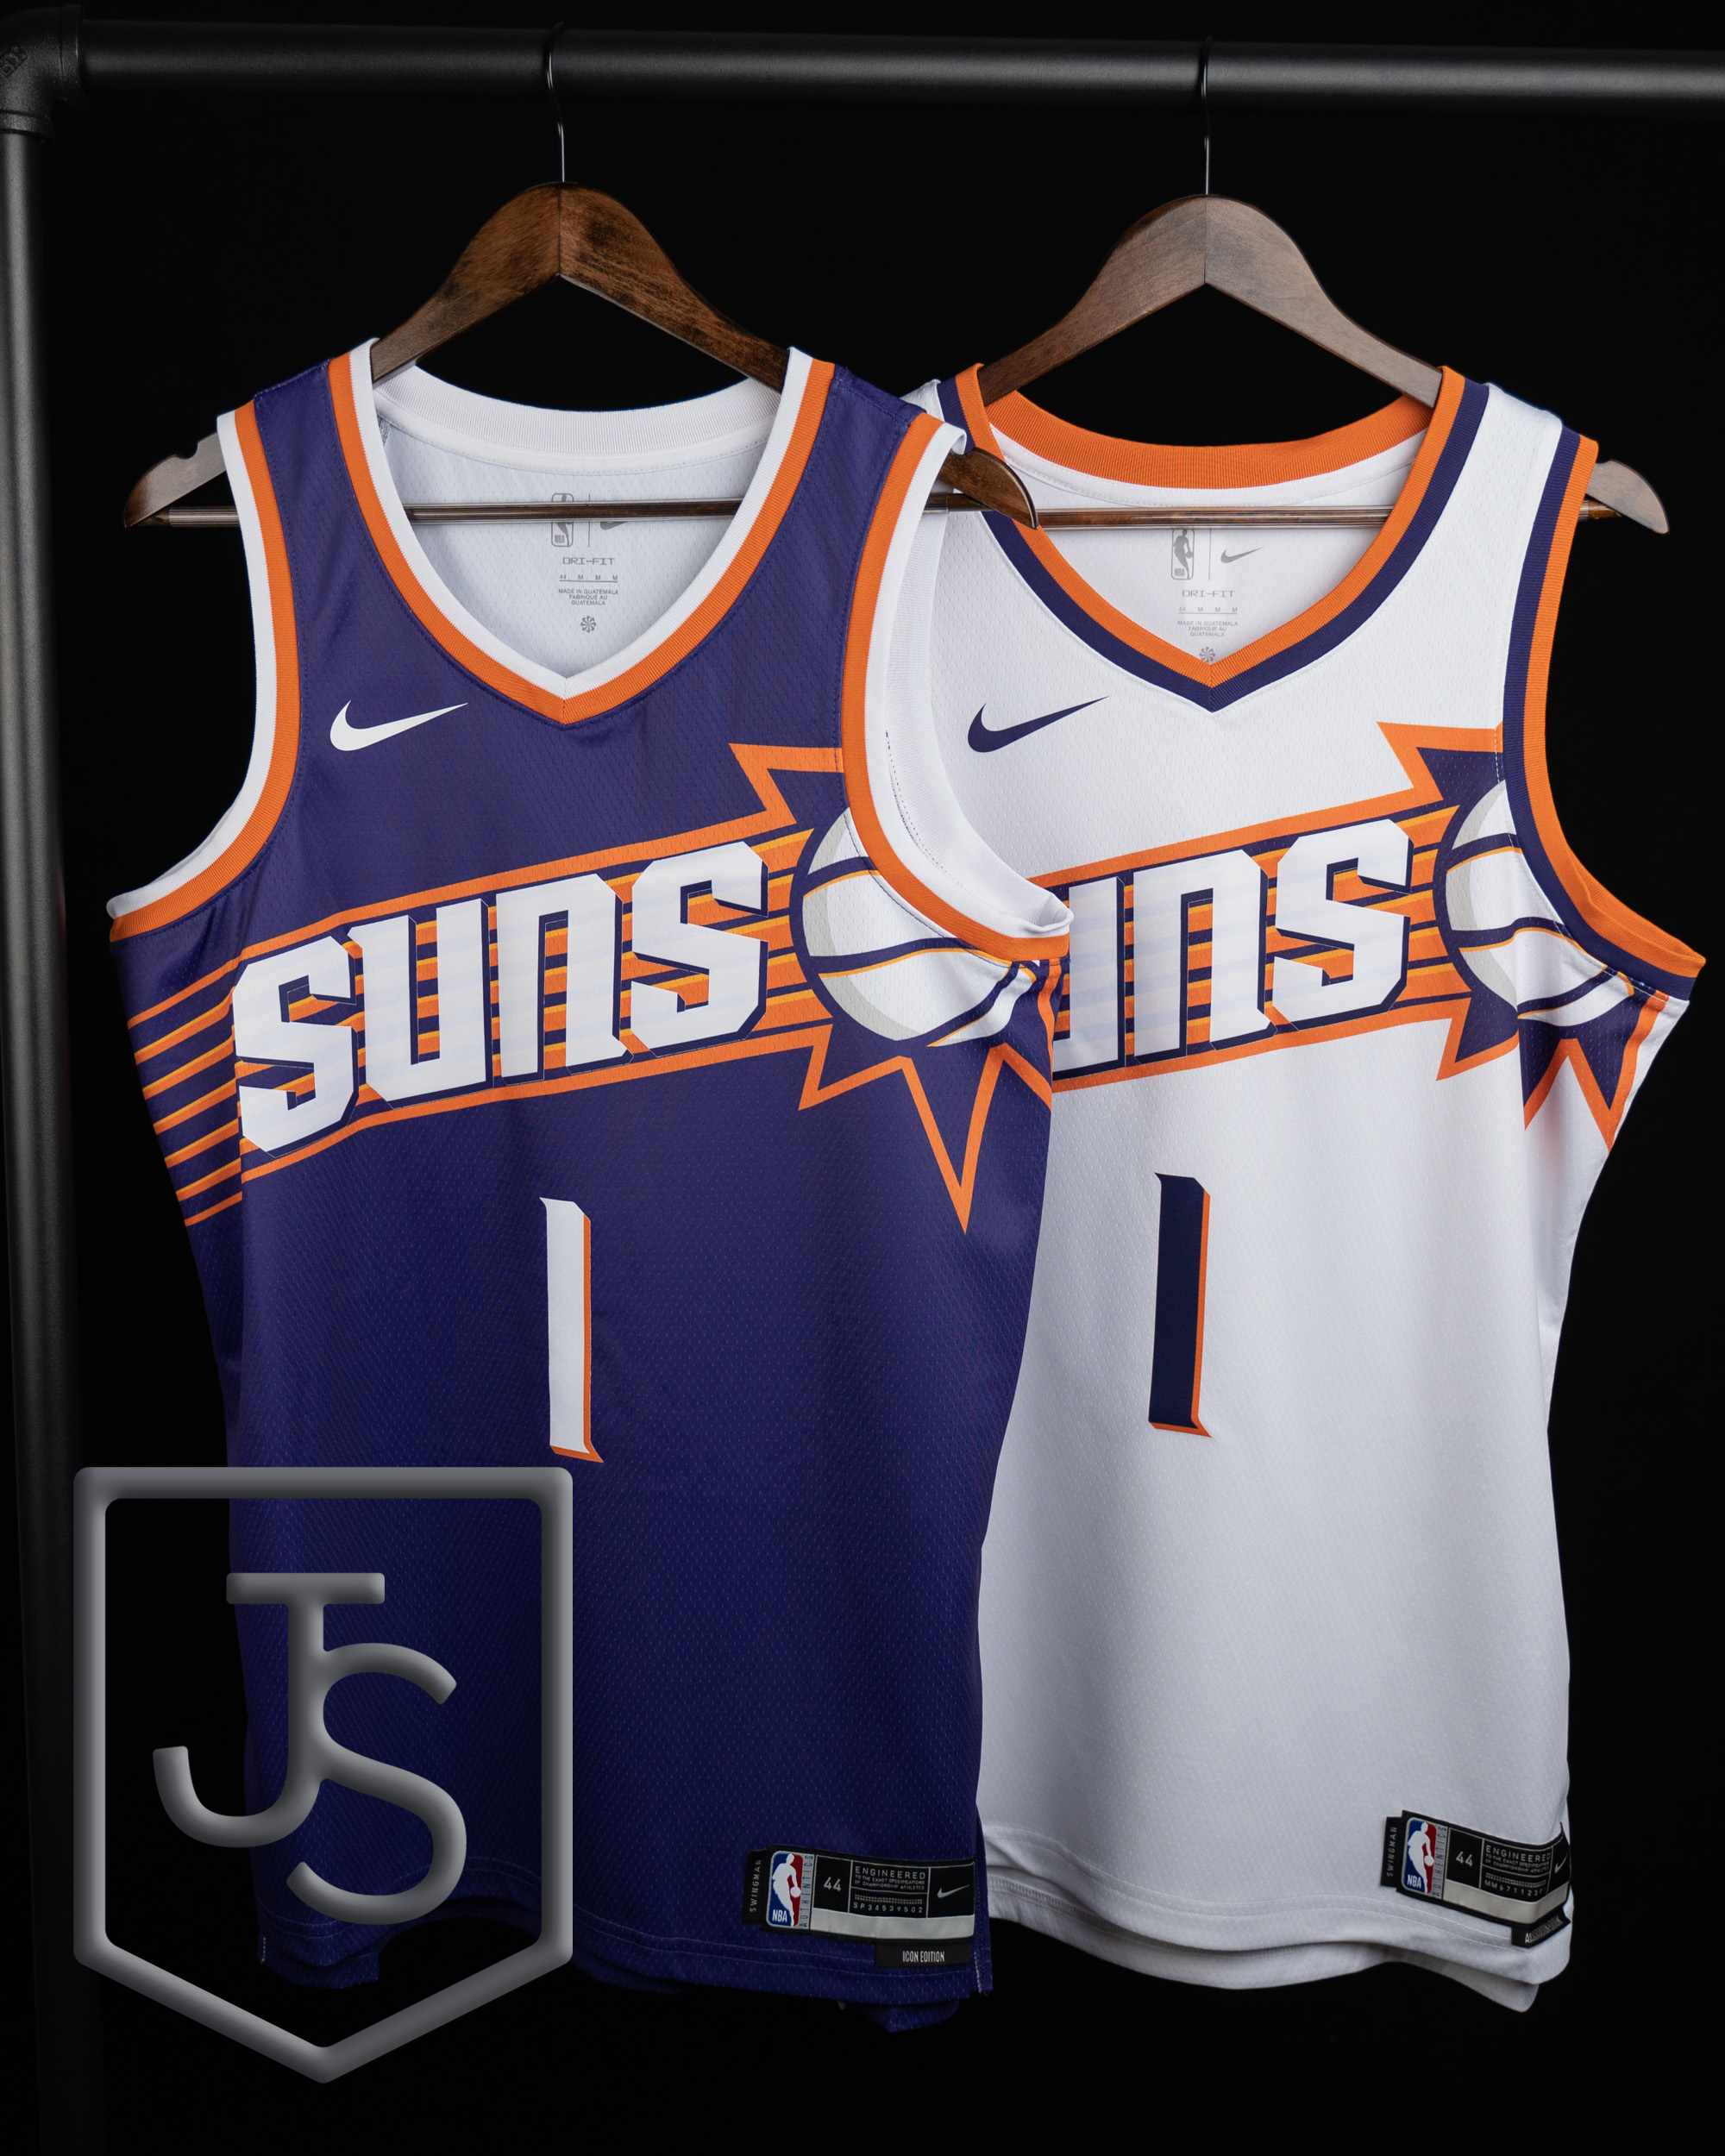 Just Sports on X: New Phoenix Suns Icon and Association jerseys